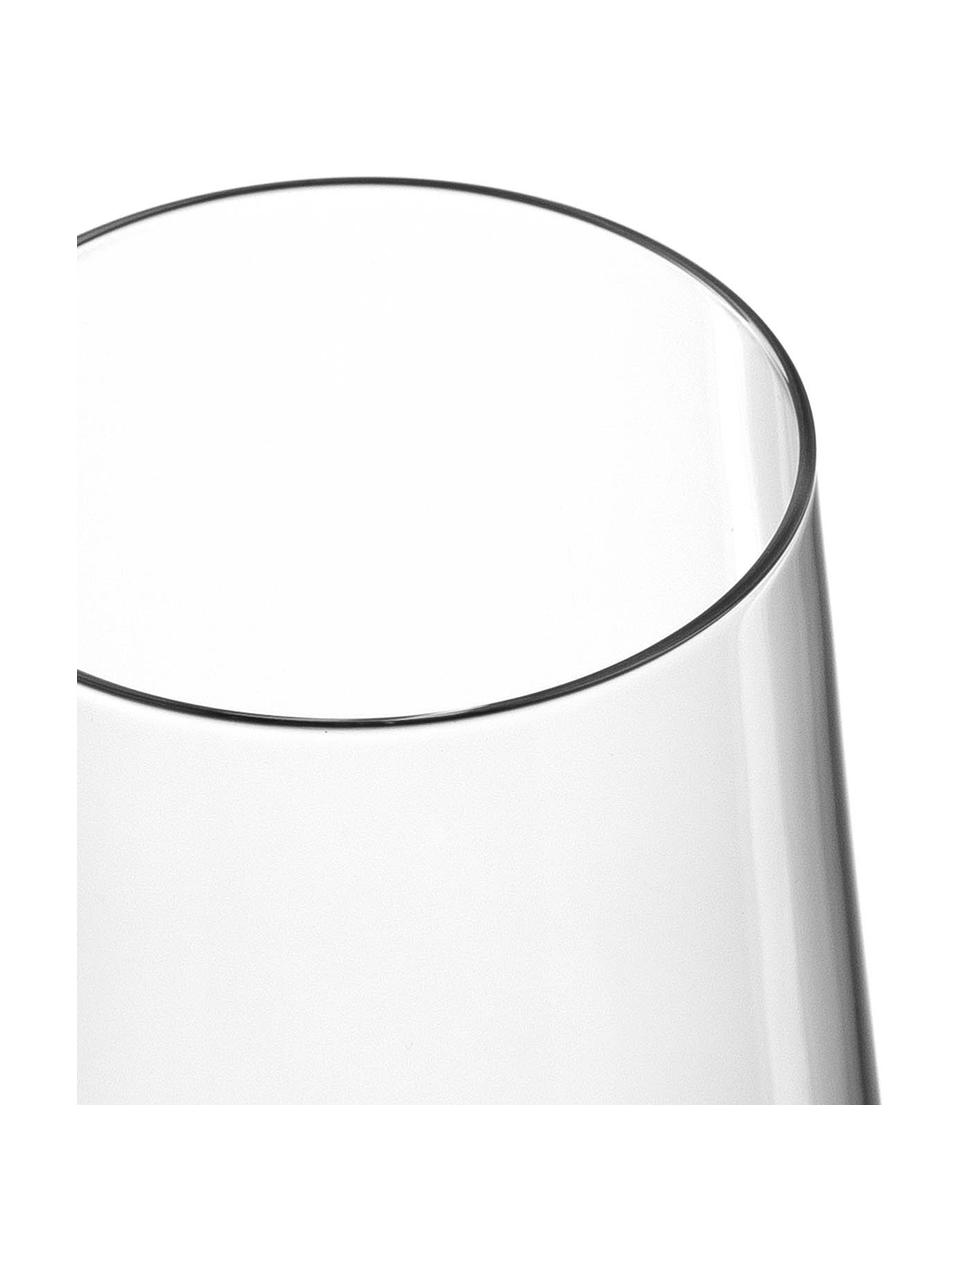 Sektgläser Puccini, 6 Stück, Teqton®-Glas, Transparent, Ø 7 x H 26 cm, 280 ml